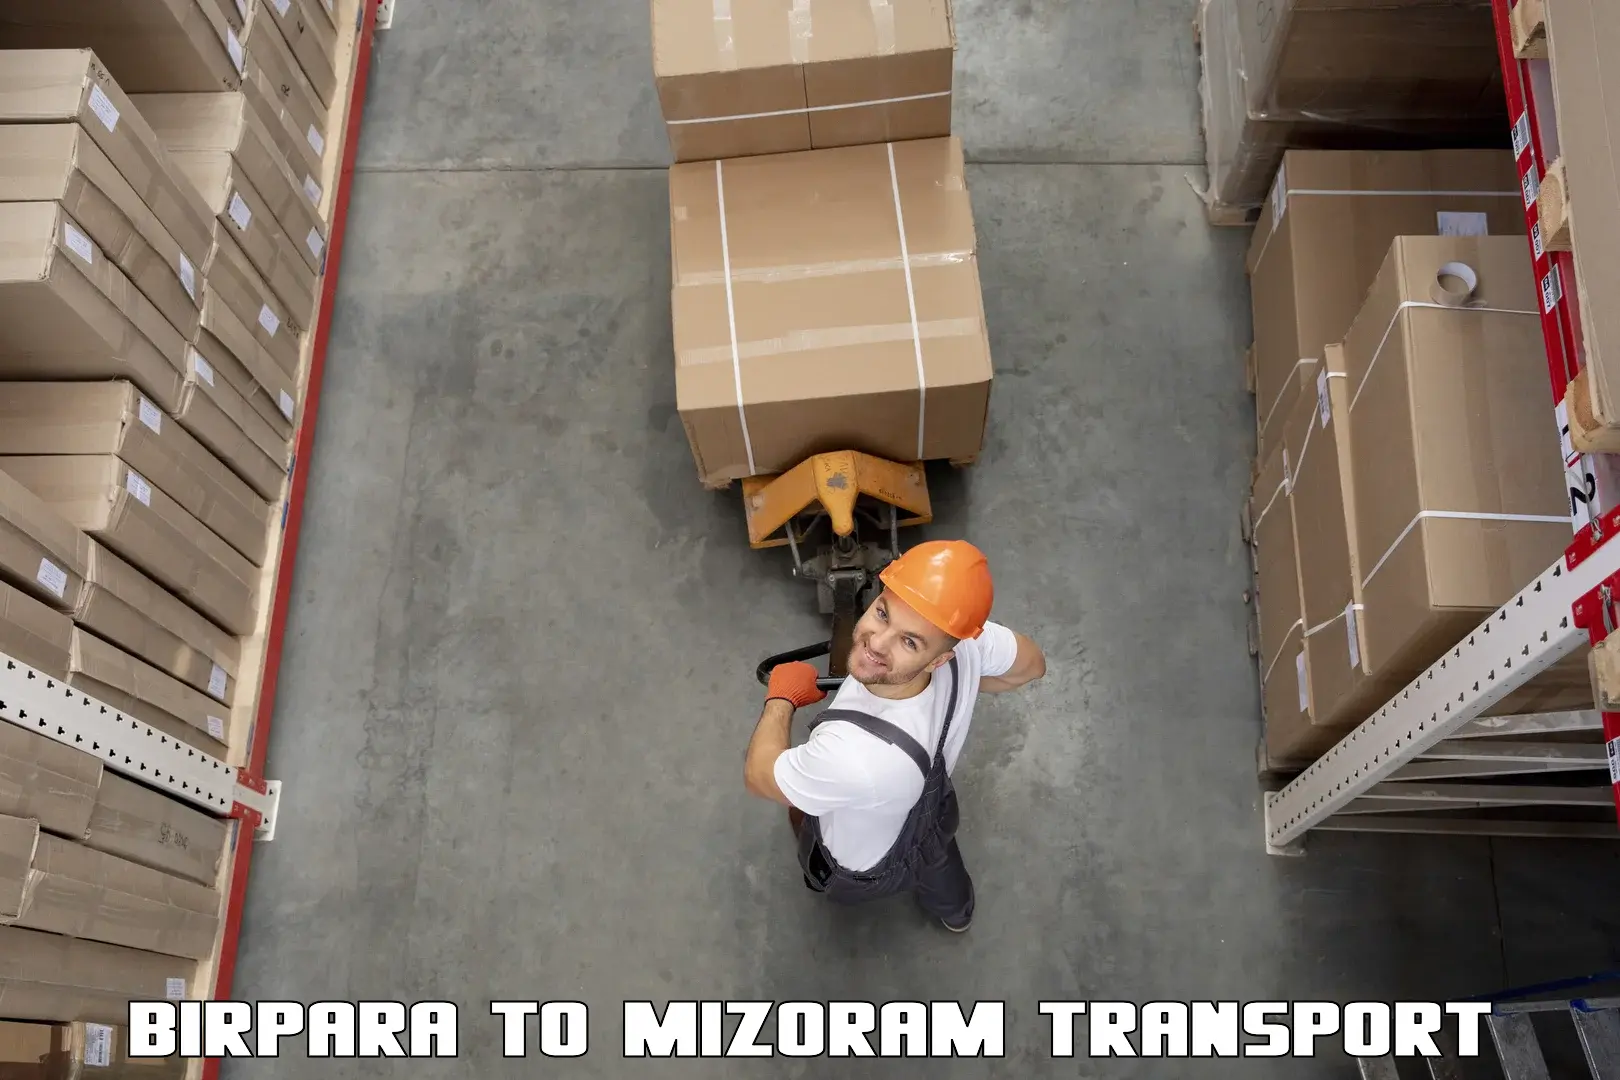 Container transport service Birpara to Aizawl